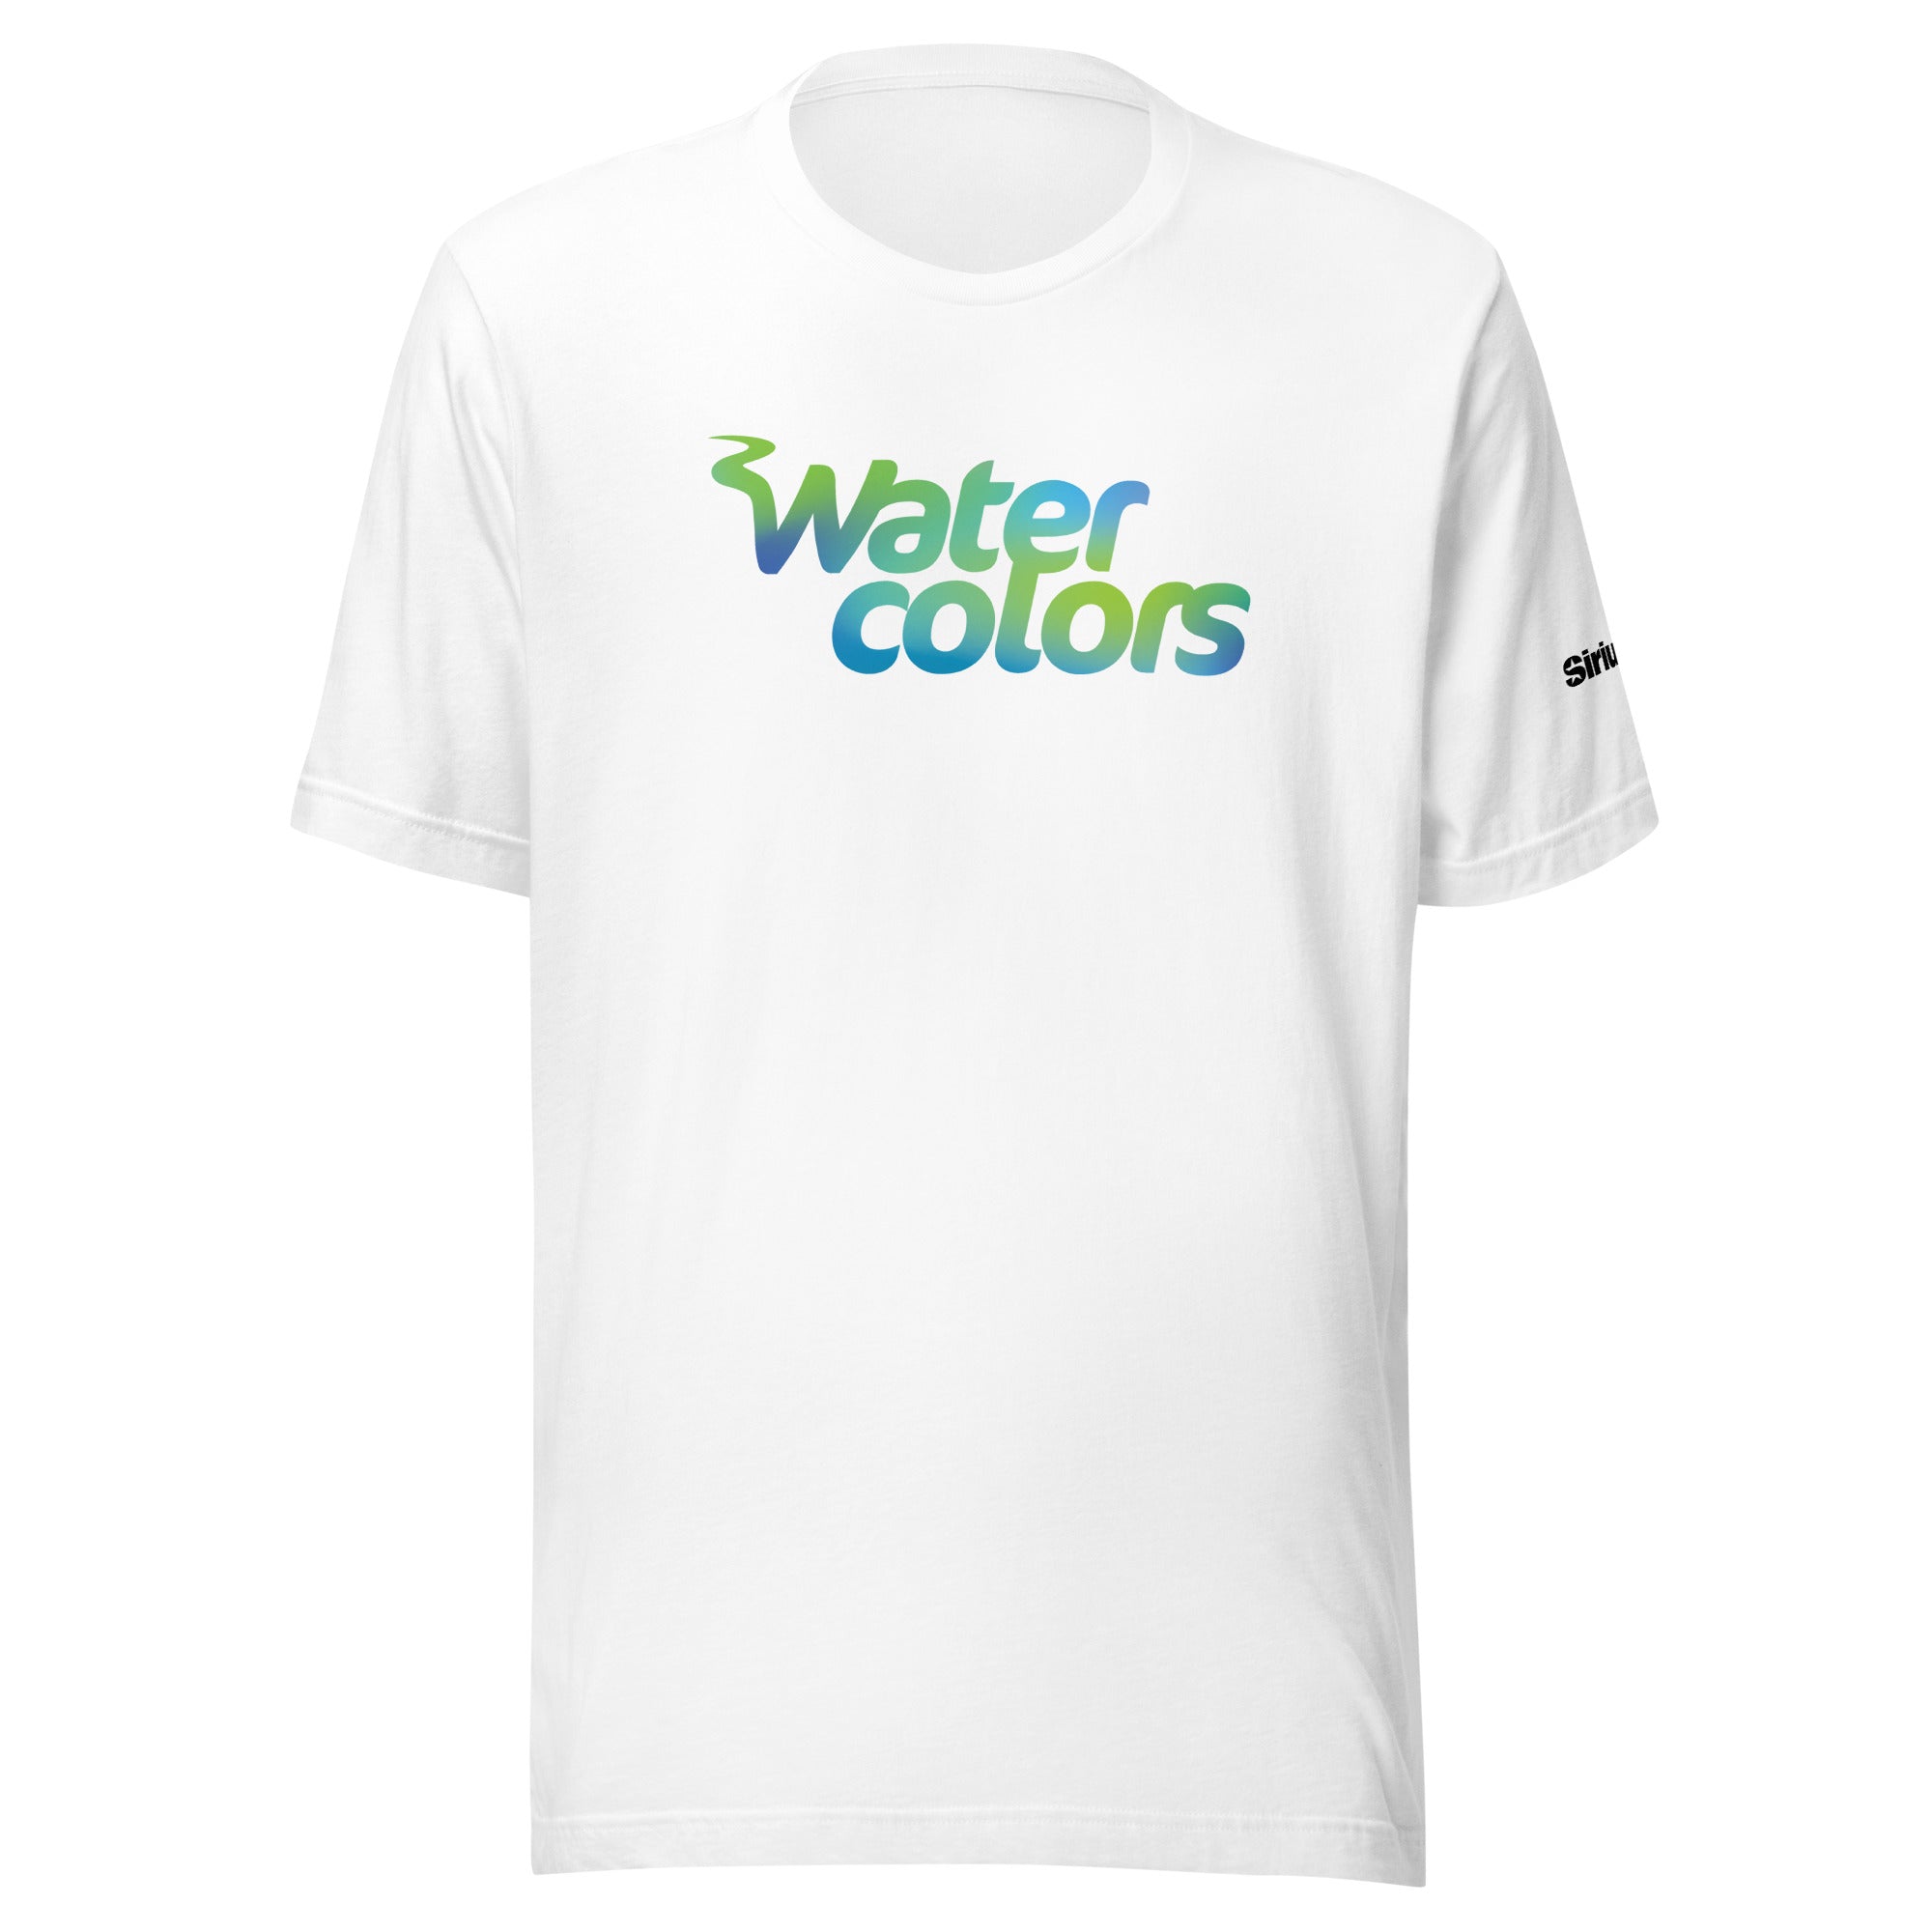 Watercolors: T-shirt (White)